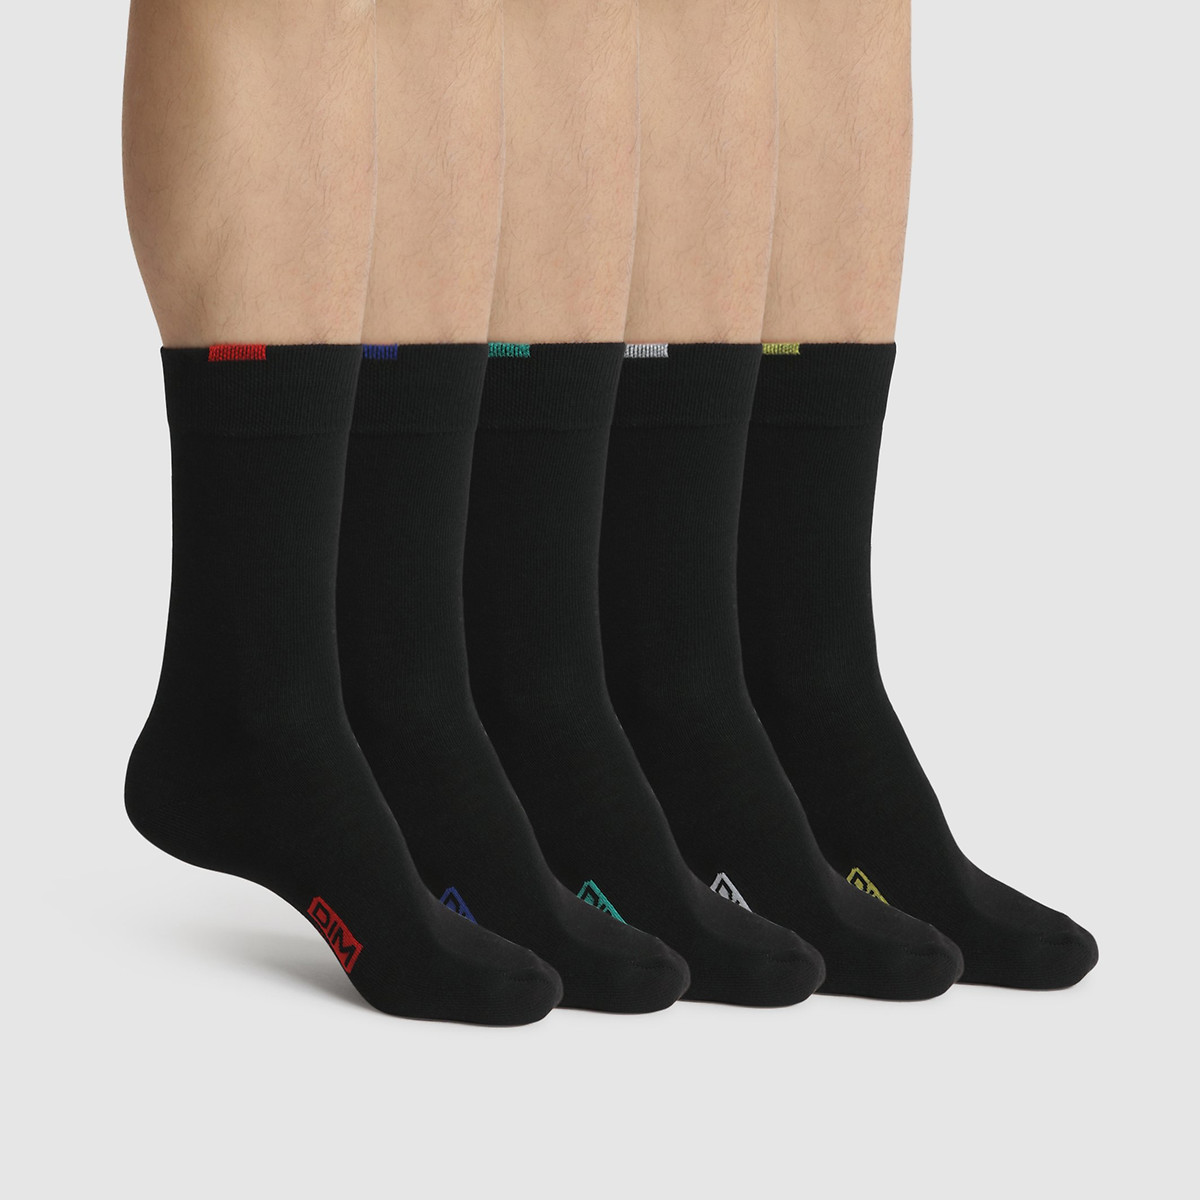 Image of Pack of 5 Pairs of Ecodim Socks